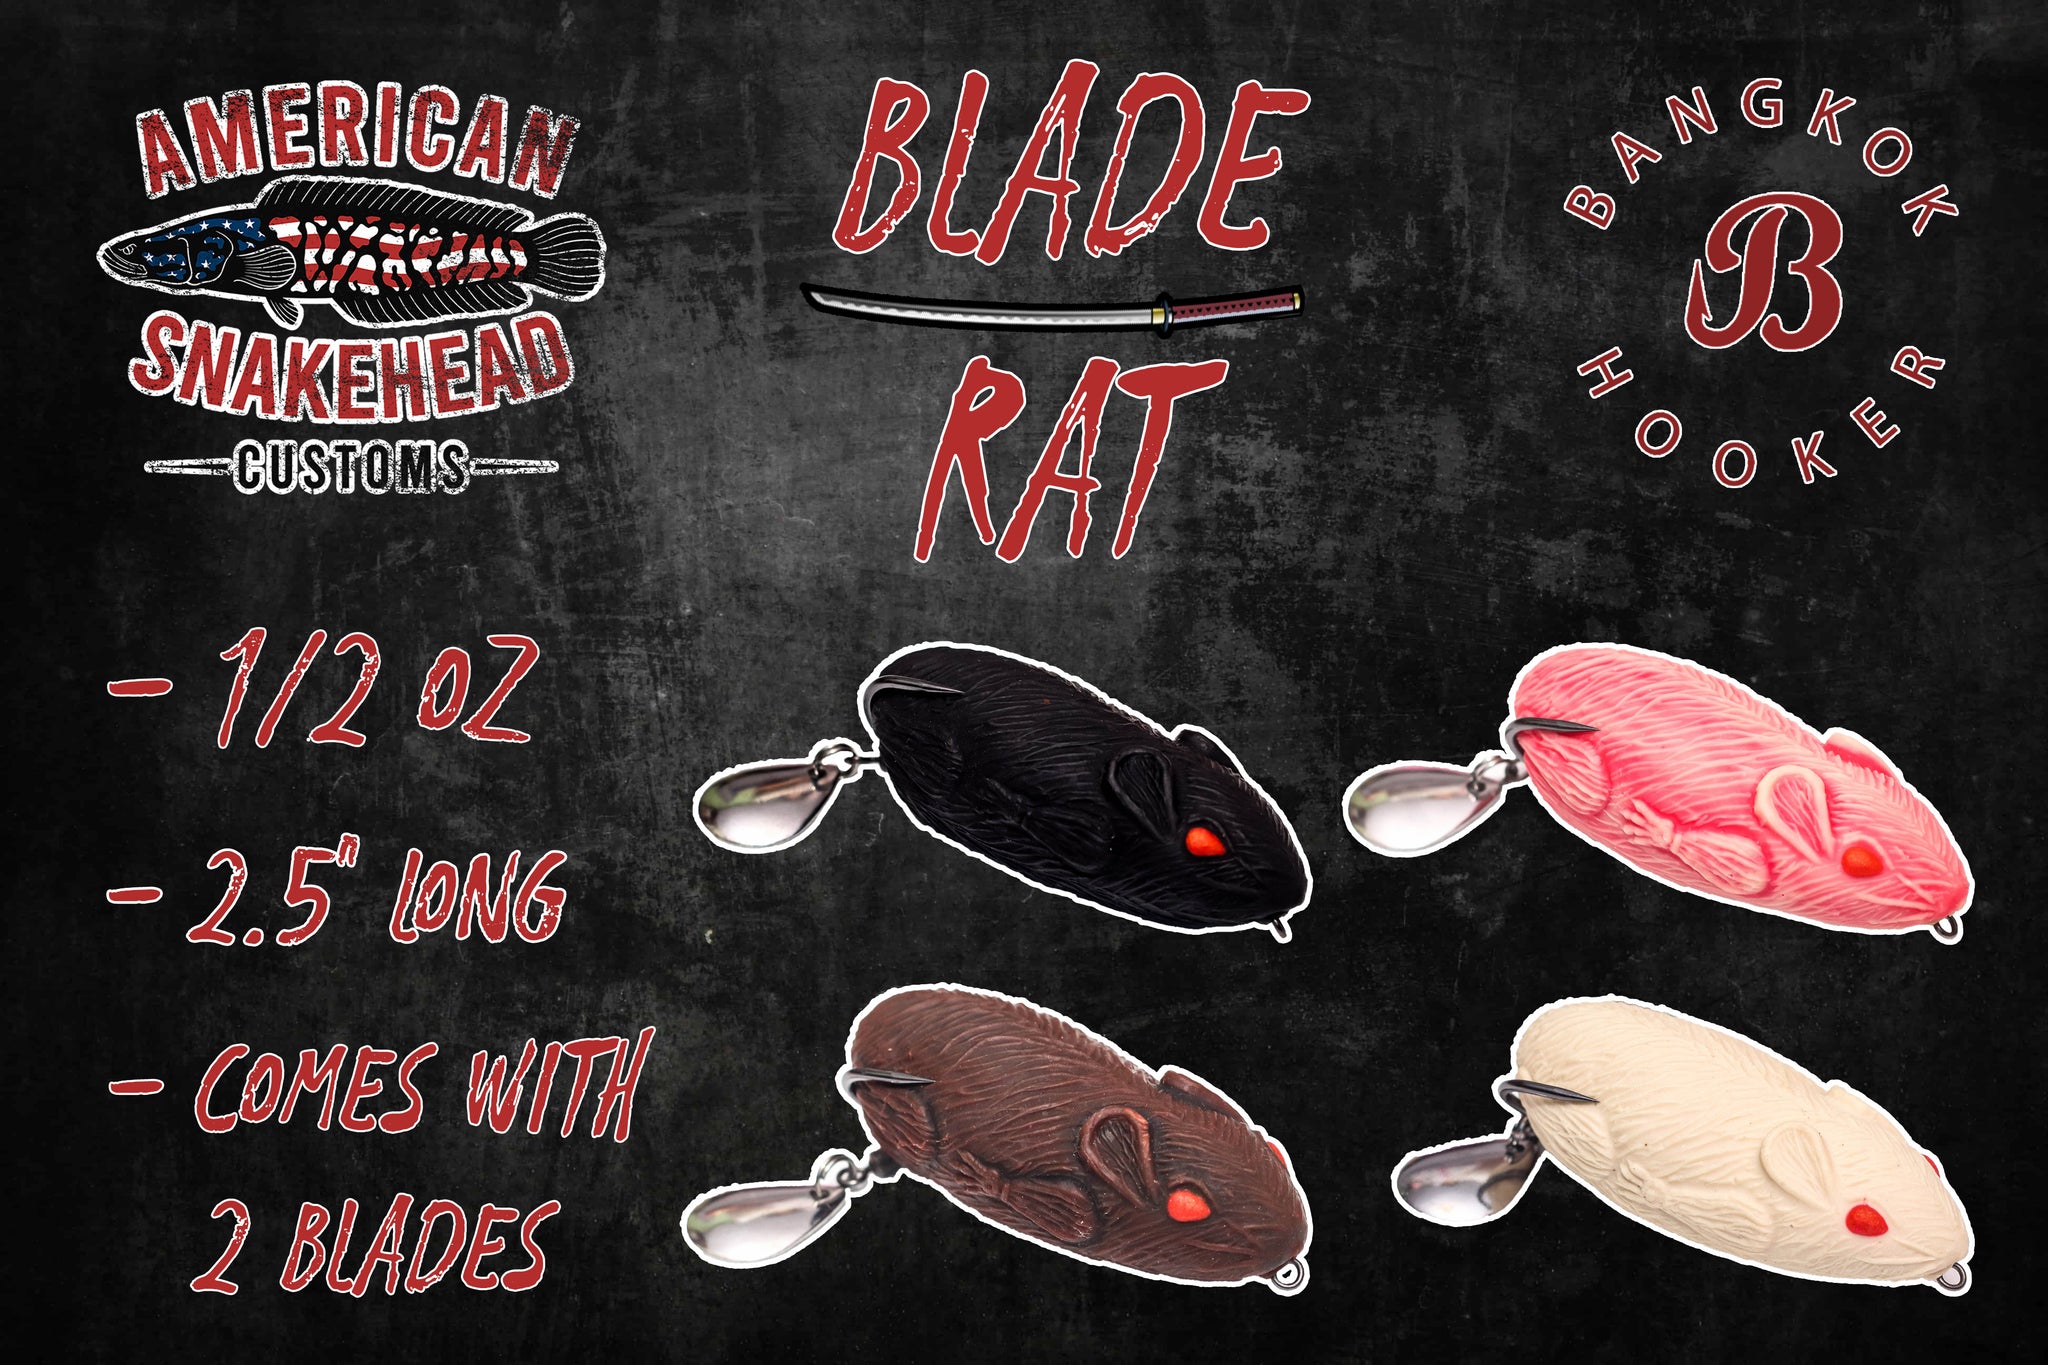 Blade Rat